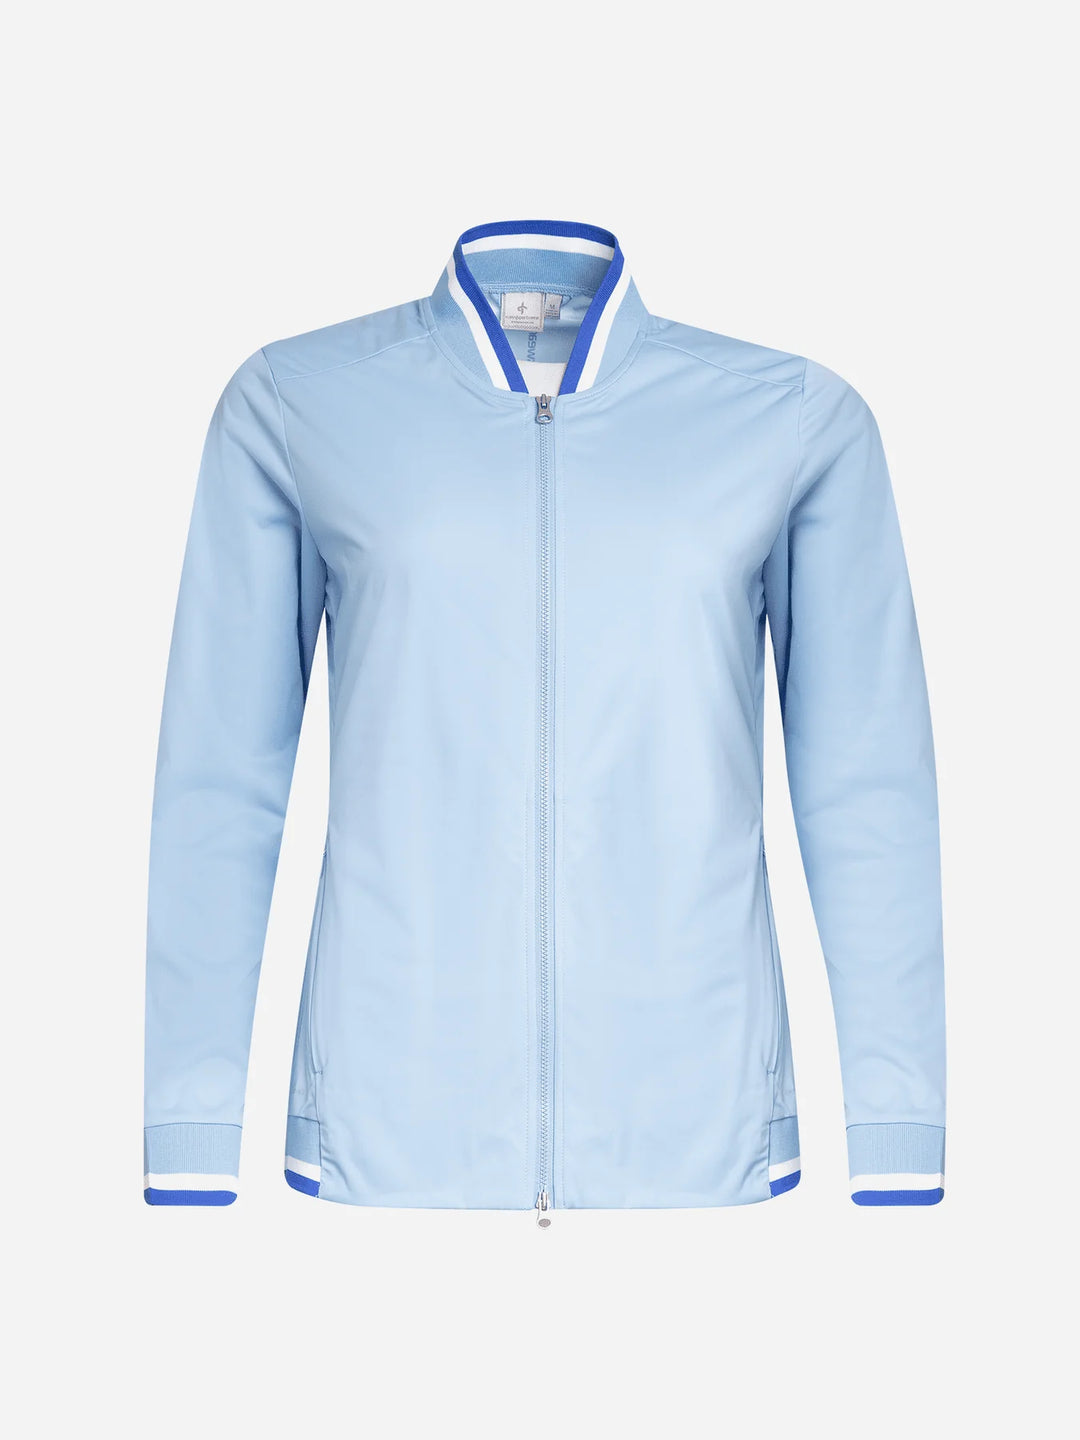 Cross Sportswear Womens Storm Jacket - BEL AIR BLUE - Golf Anything Canada